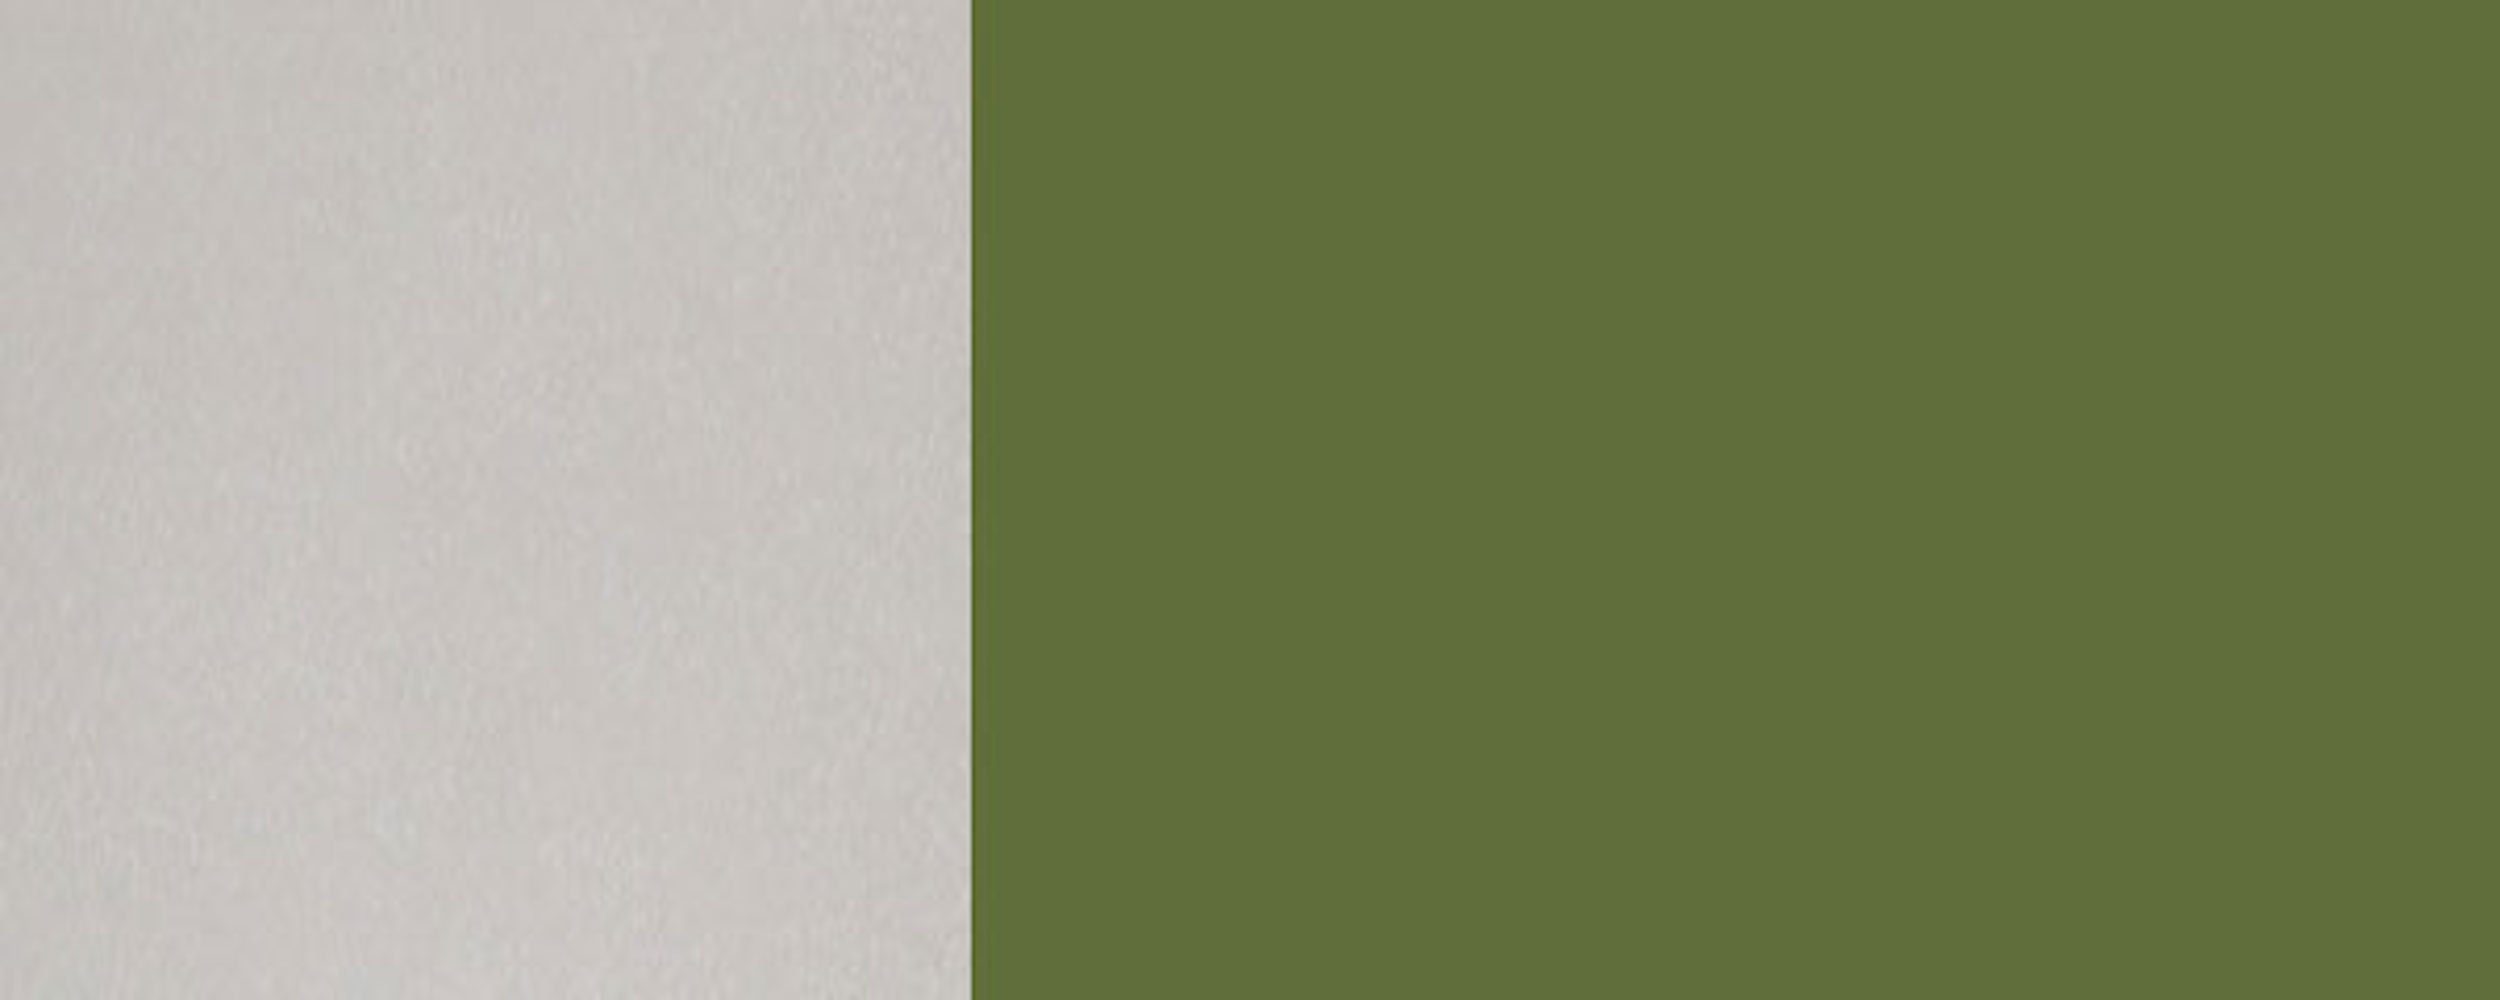 Feldmann-Wohnen Klapphängeschrank Rimini (Rimini) Korpusfarbe Glaseinsatz mit 1-türig RAL farngrün matt wählbar 6025 Front- 45cm und